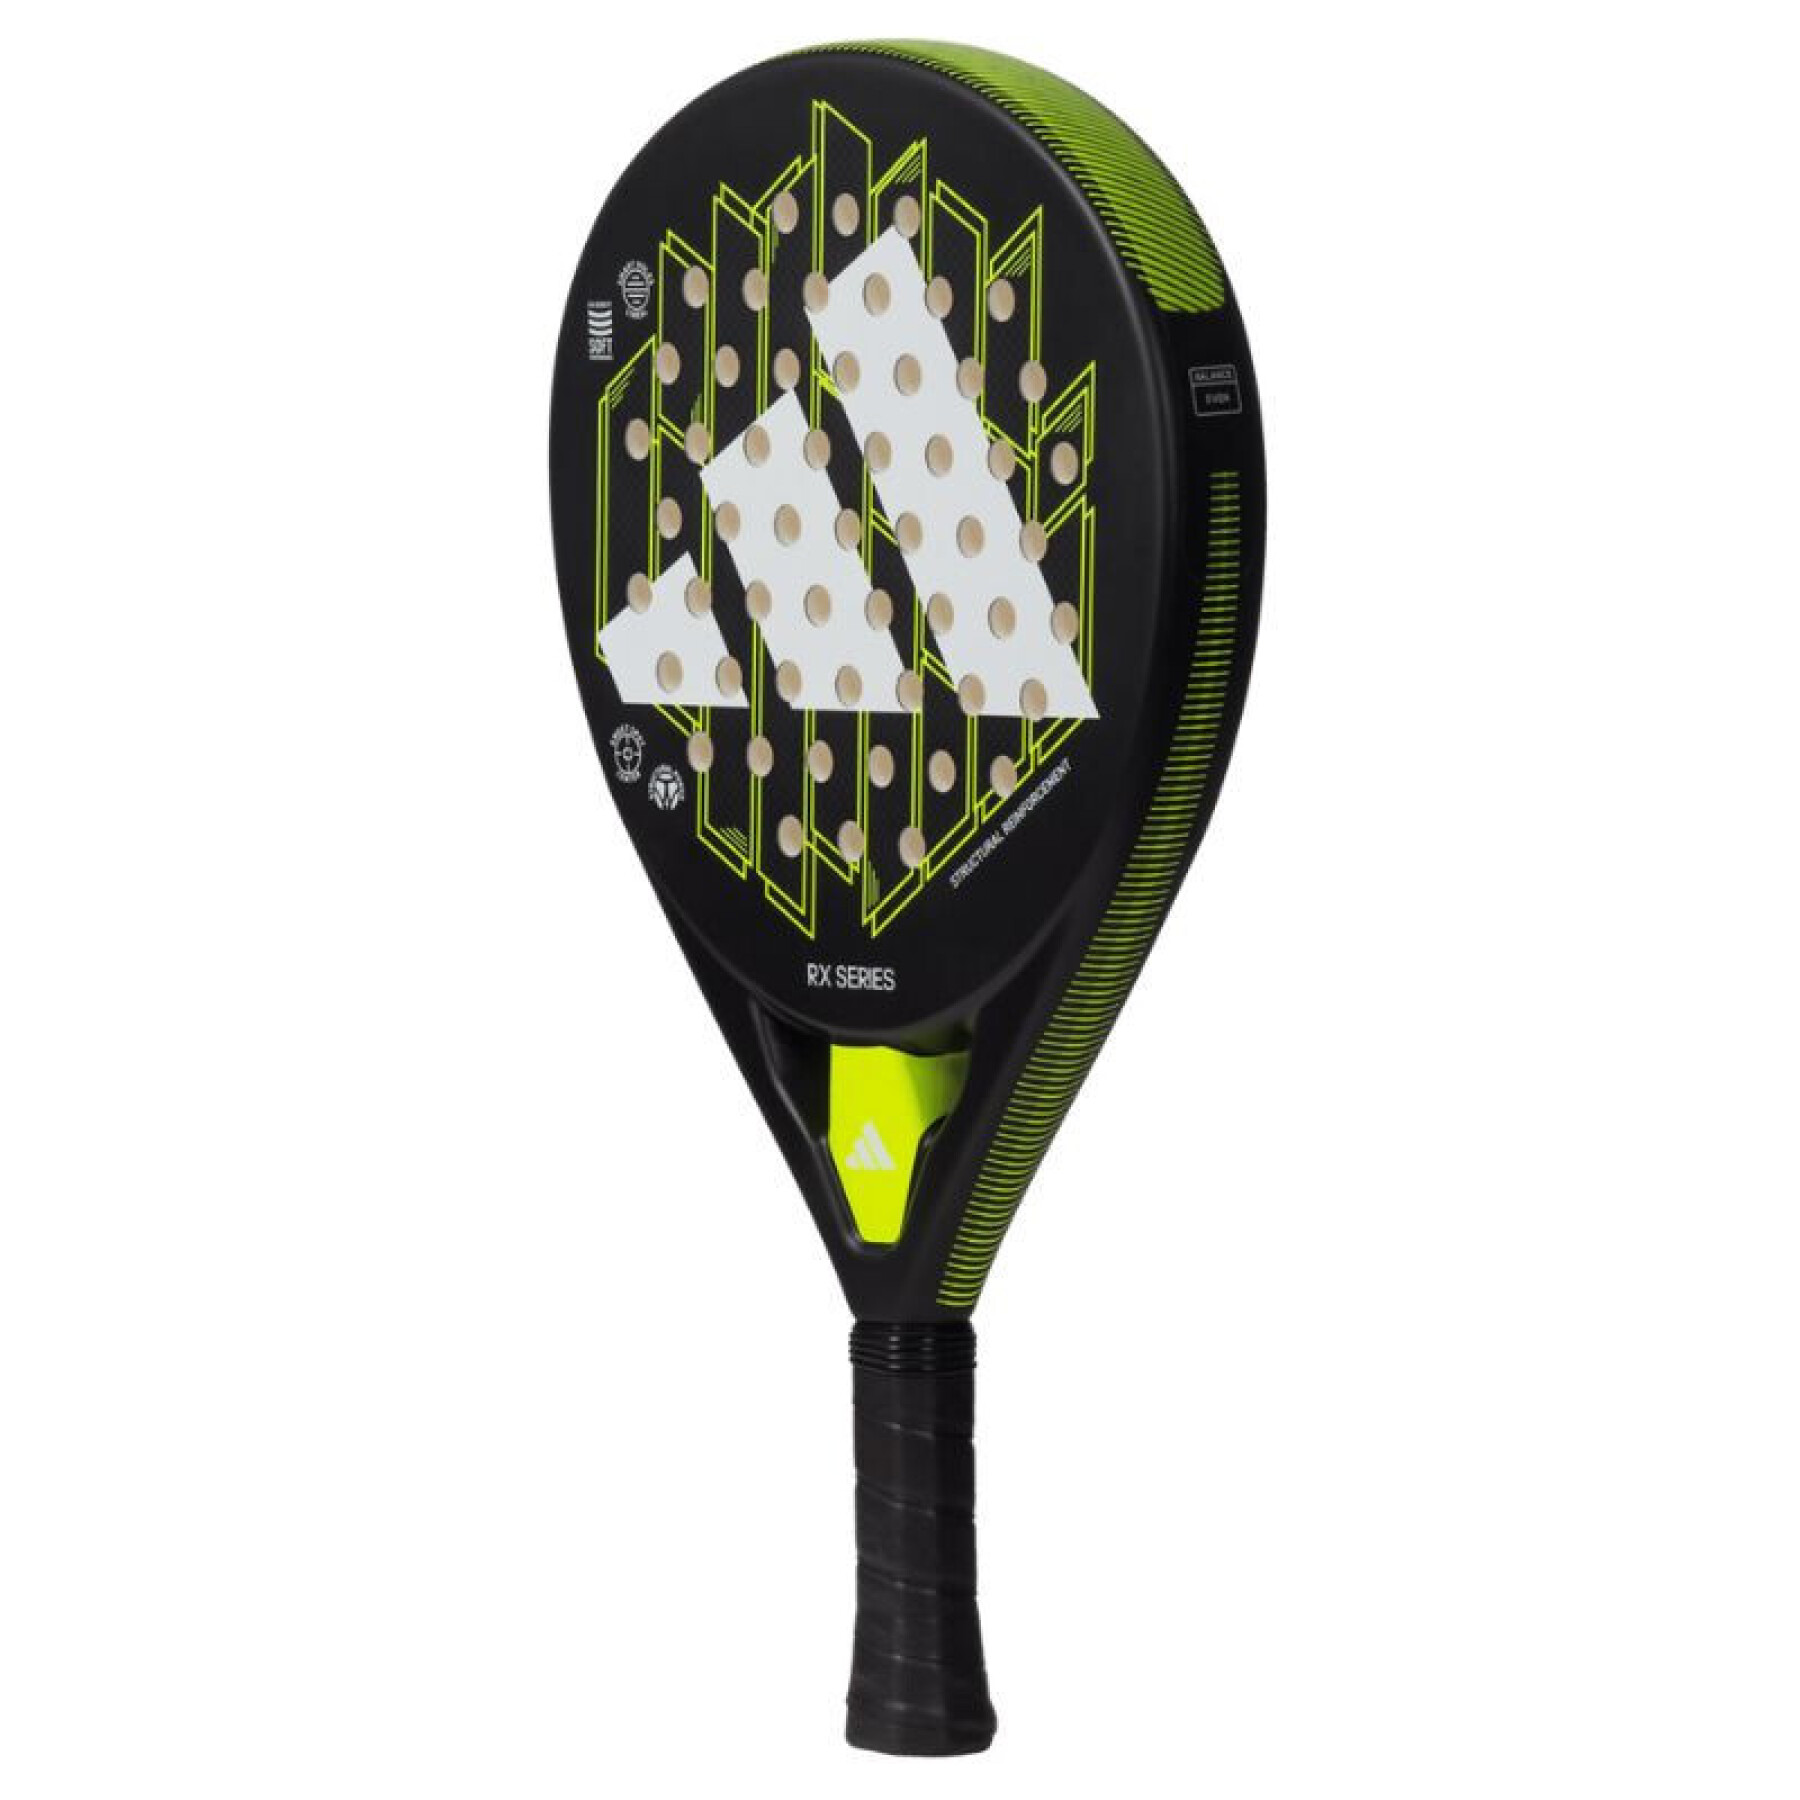 Paddle racket adidas Rx Series